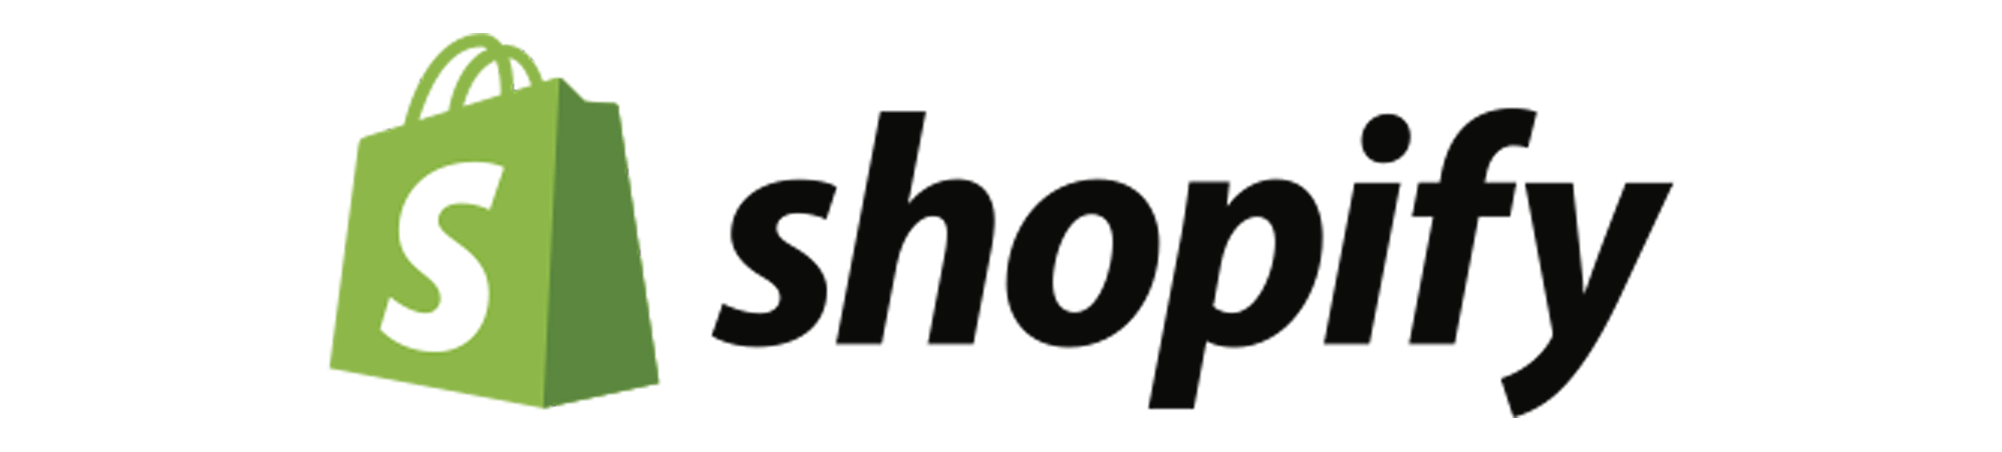 Shopify logo1